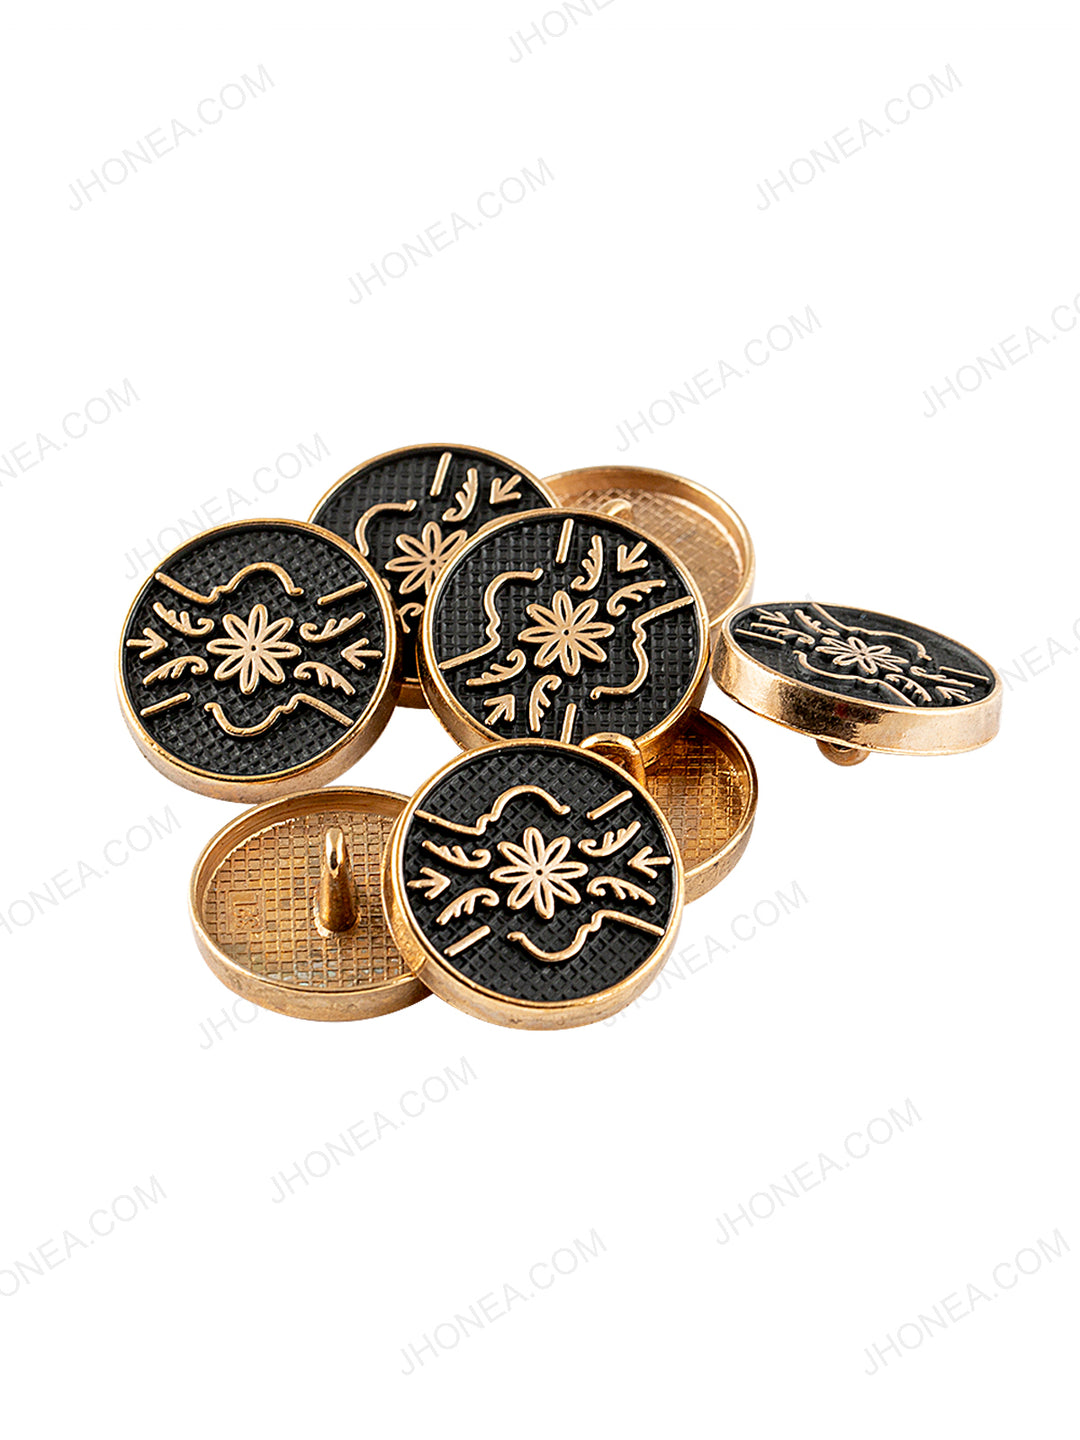 Matte Gold Engraved Design Coat Button